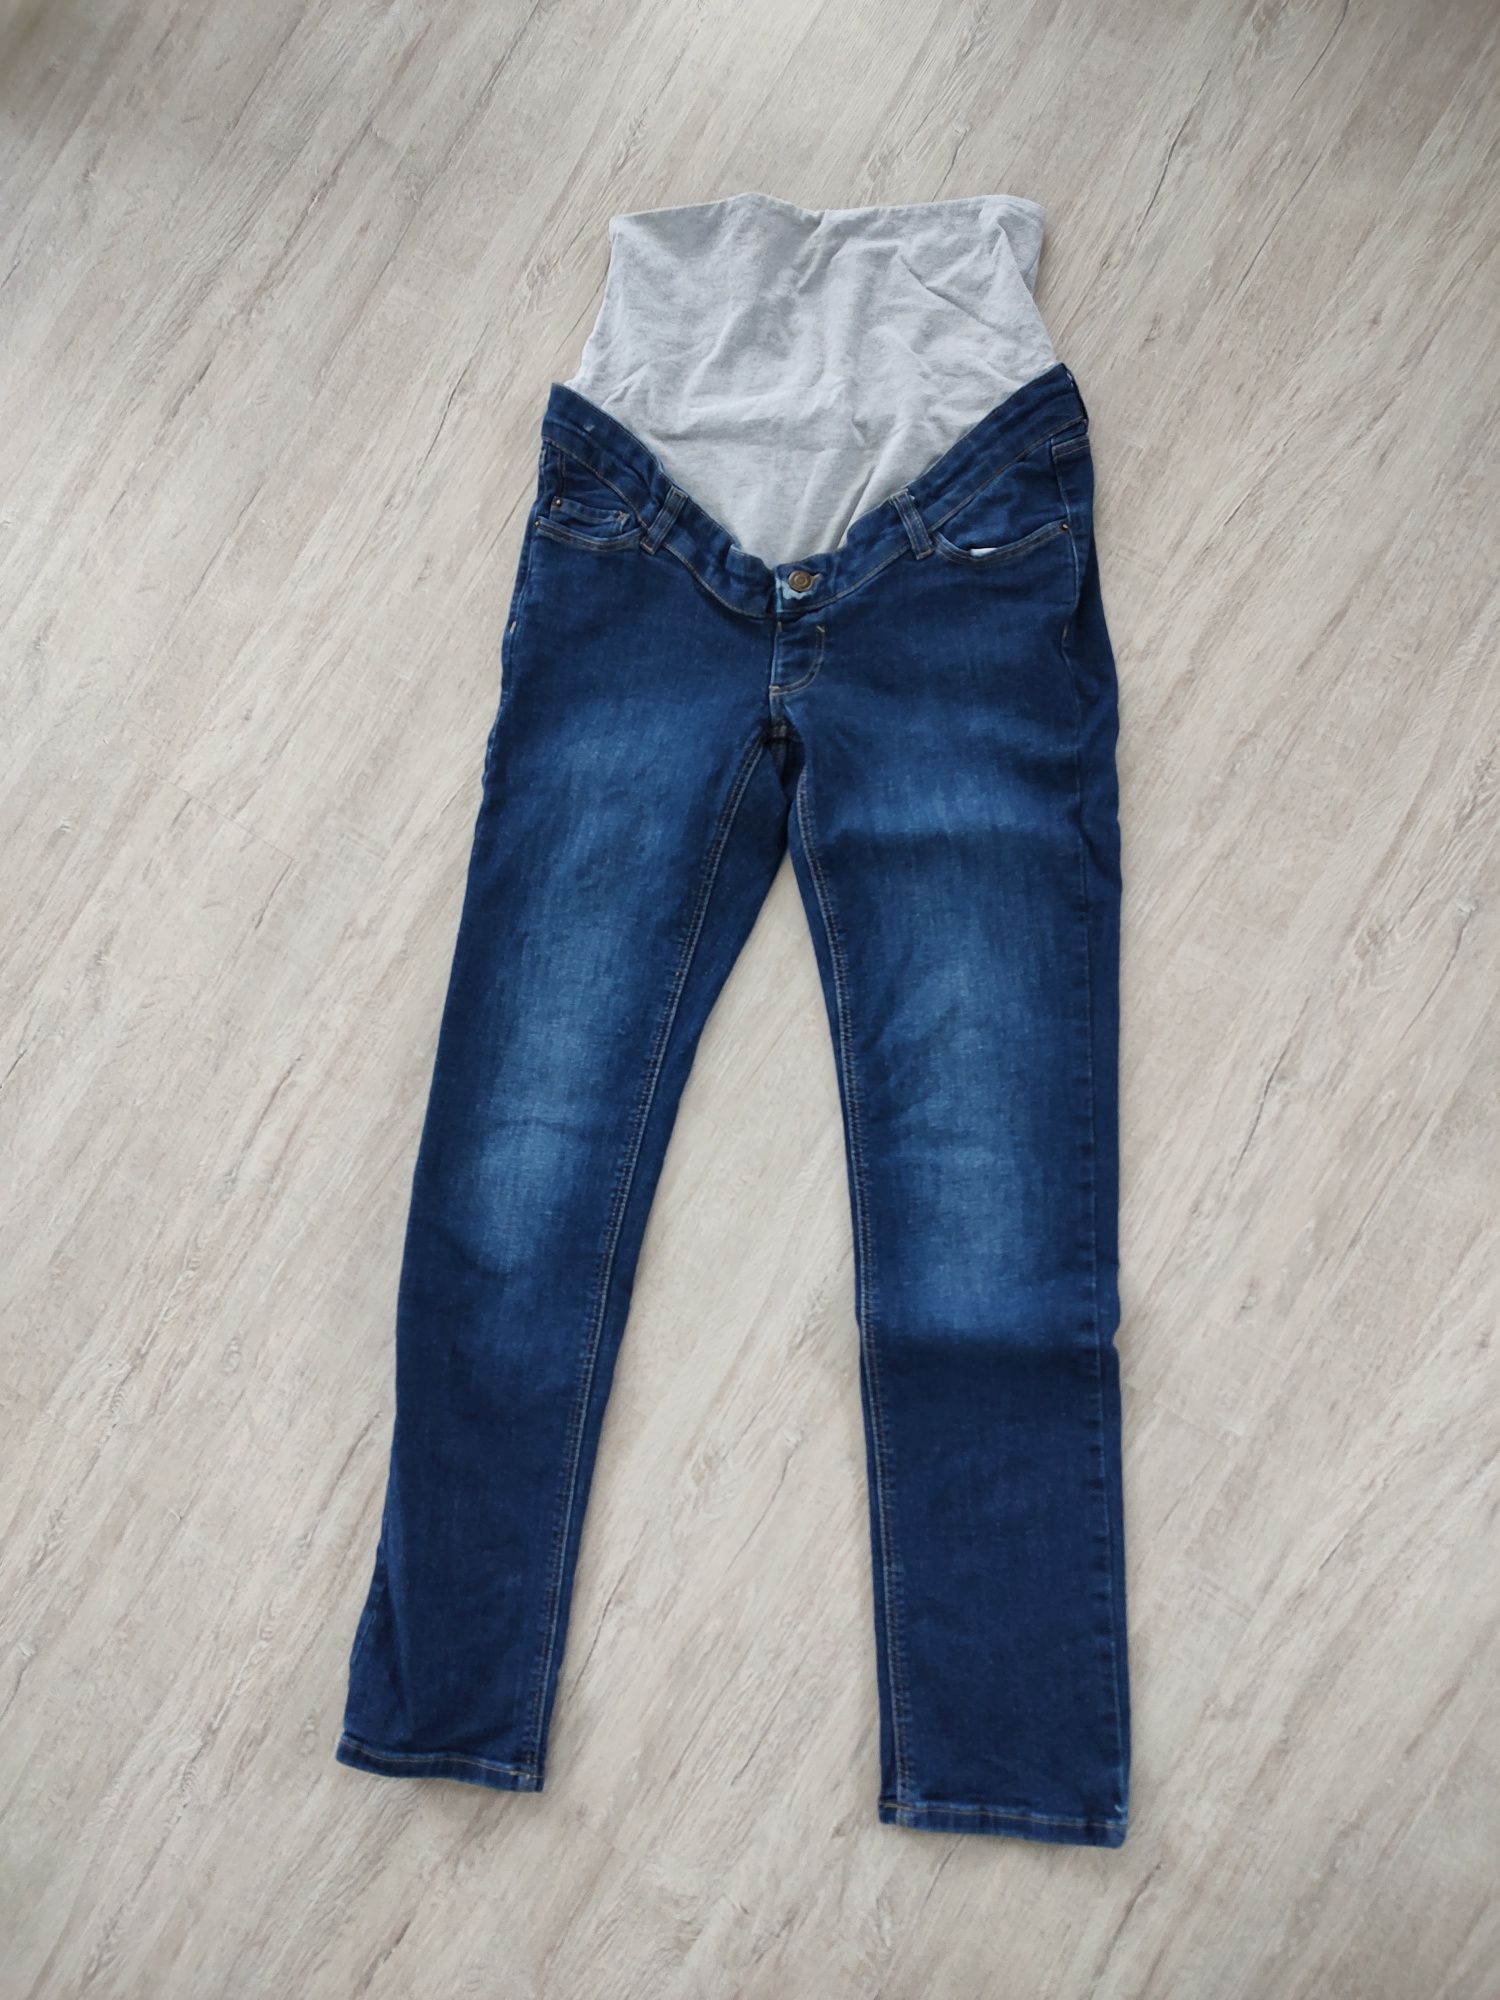 Spodnie ciążowe jeansy r. 38 C&A 2 pary